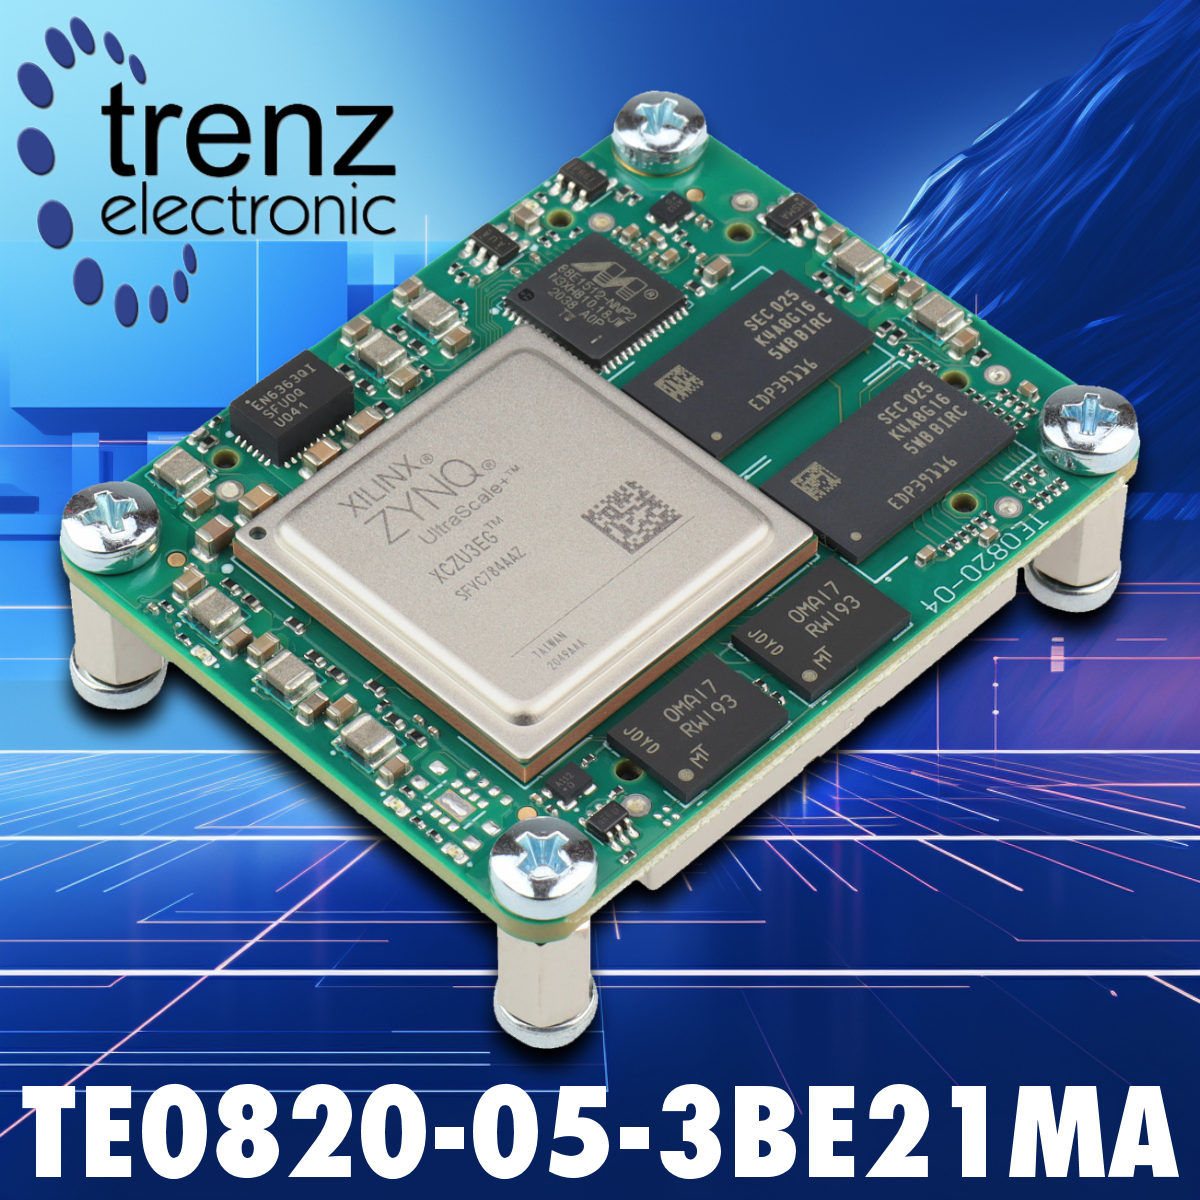 TE0820-05 in stock now.

MPSoC Module with AMD Zynq™ UltraScale+™ ZU3EG-1E, 2 GByte DDR4 SDRAM

sundance.com/te0820-05/

#AMD #TrenzElectronic #FPGA #FPGAs #Embedded  #Vivado #Vitis #Xilinx #MPSoC #AMDZynq #AMDXilinx #Zynq #EmbeddedSystems #EmbeddedSolutions #embeddedcomputing